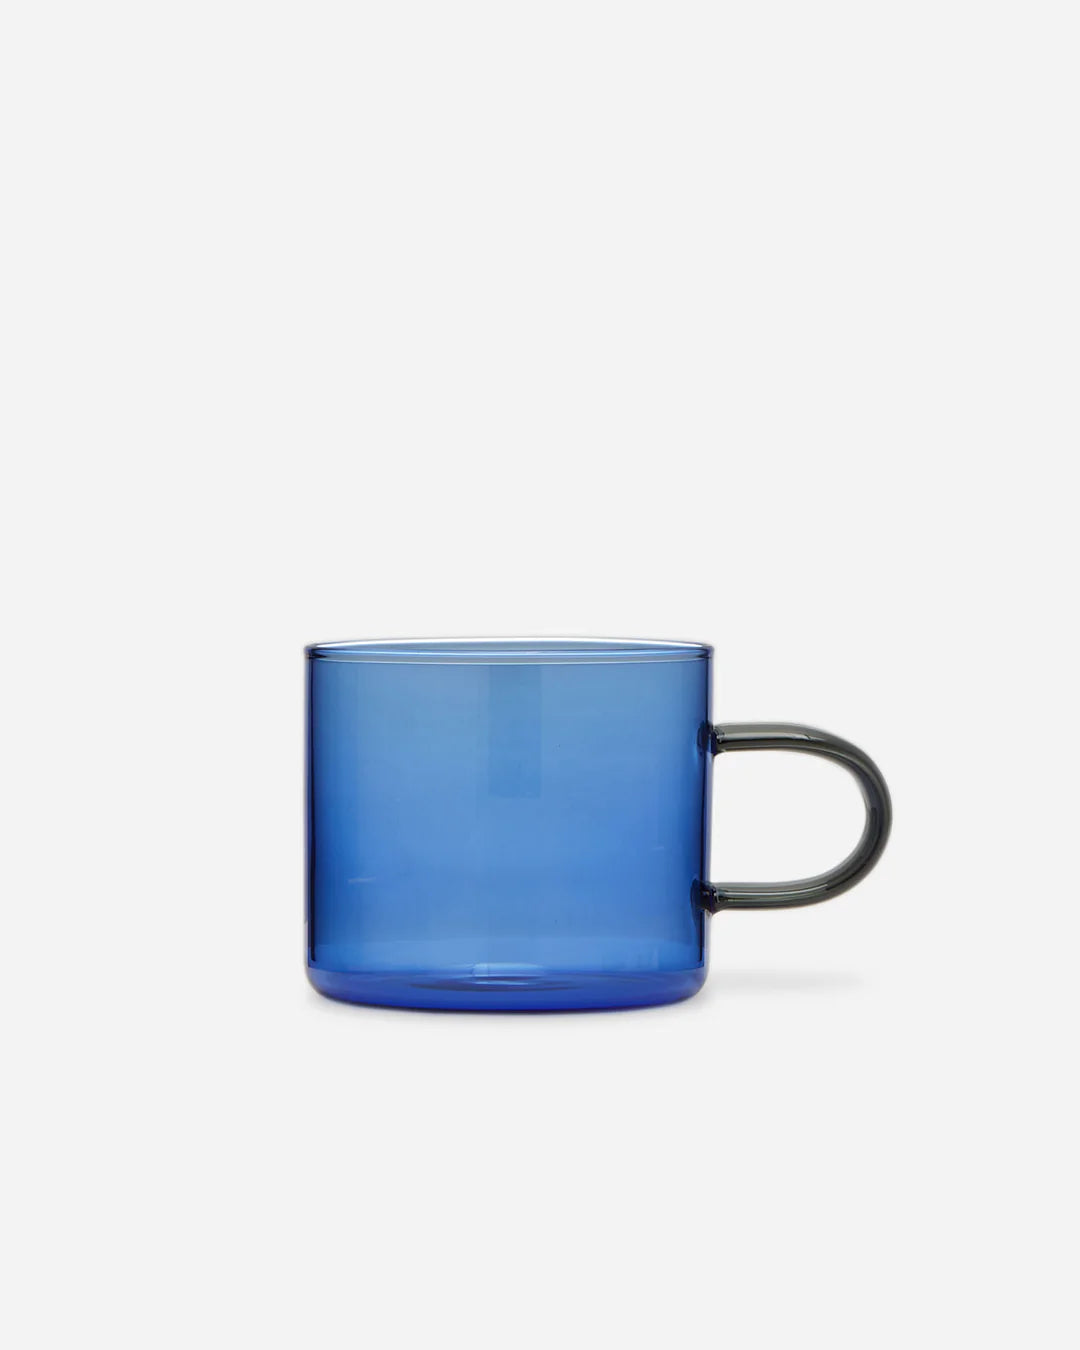 Hudson Wilder Lotta Coffee/Tea Cup Set - Blue Smoke